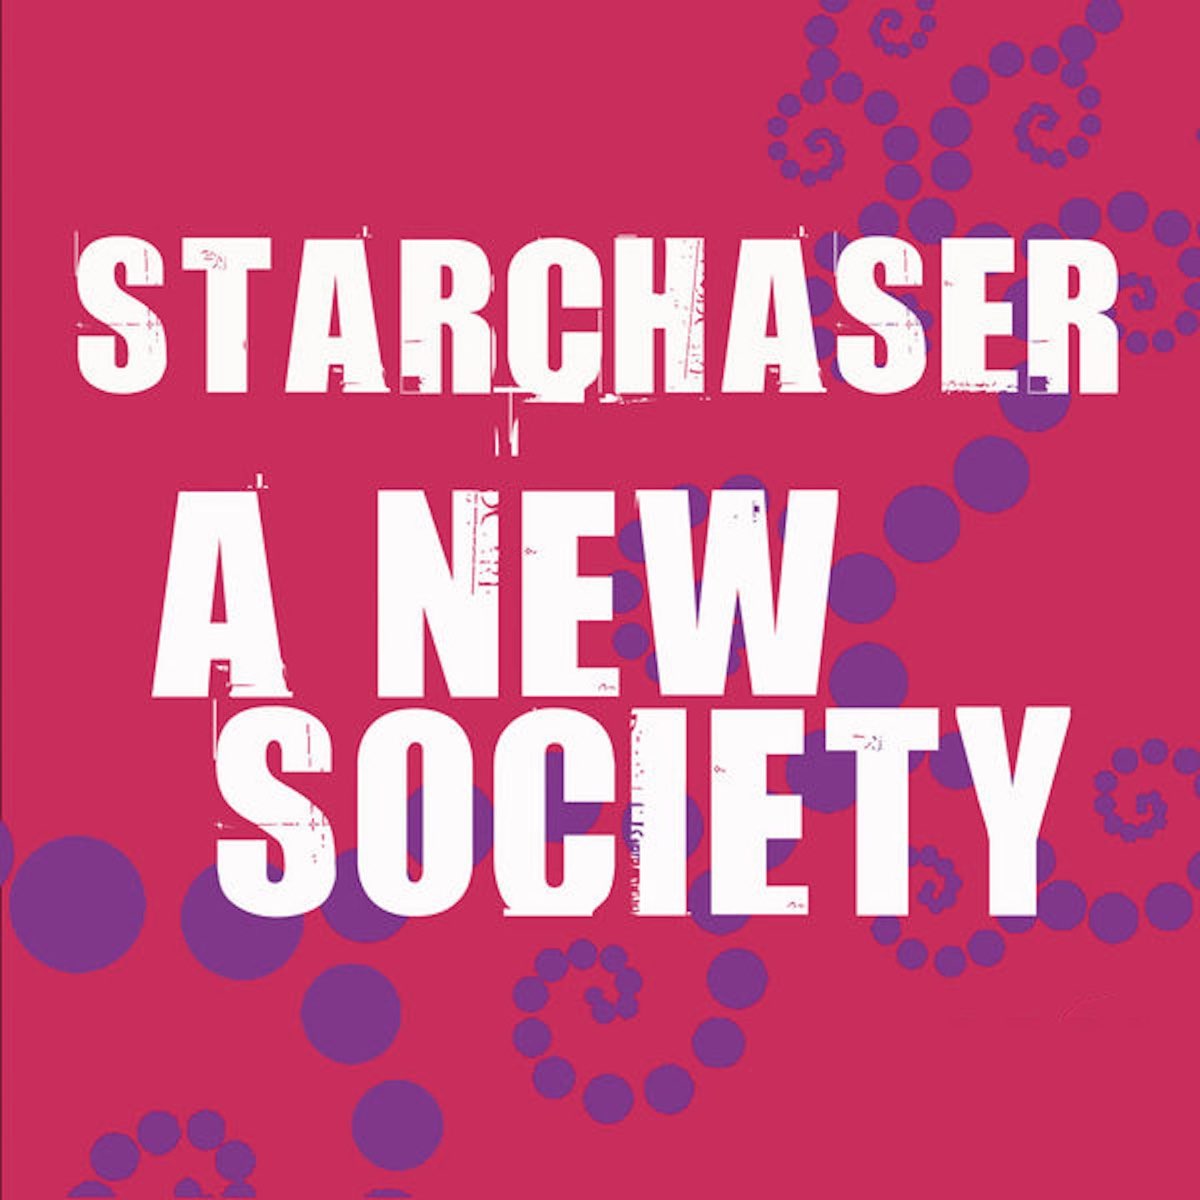 Starchaser. 2019 - Starchaser [Ep]. New society